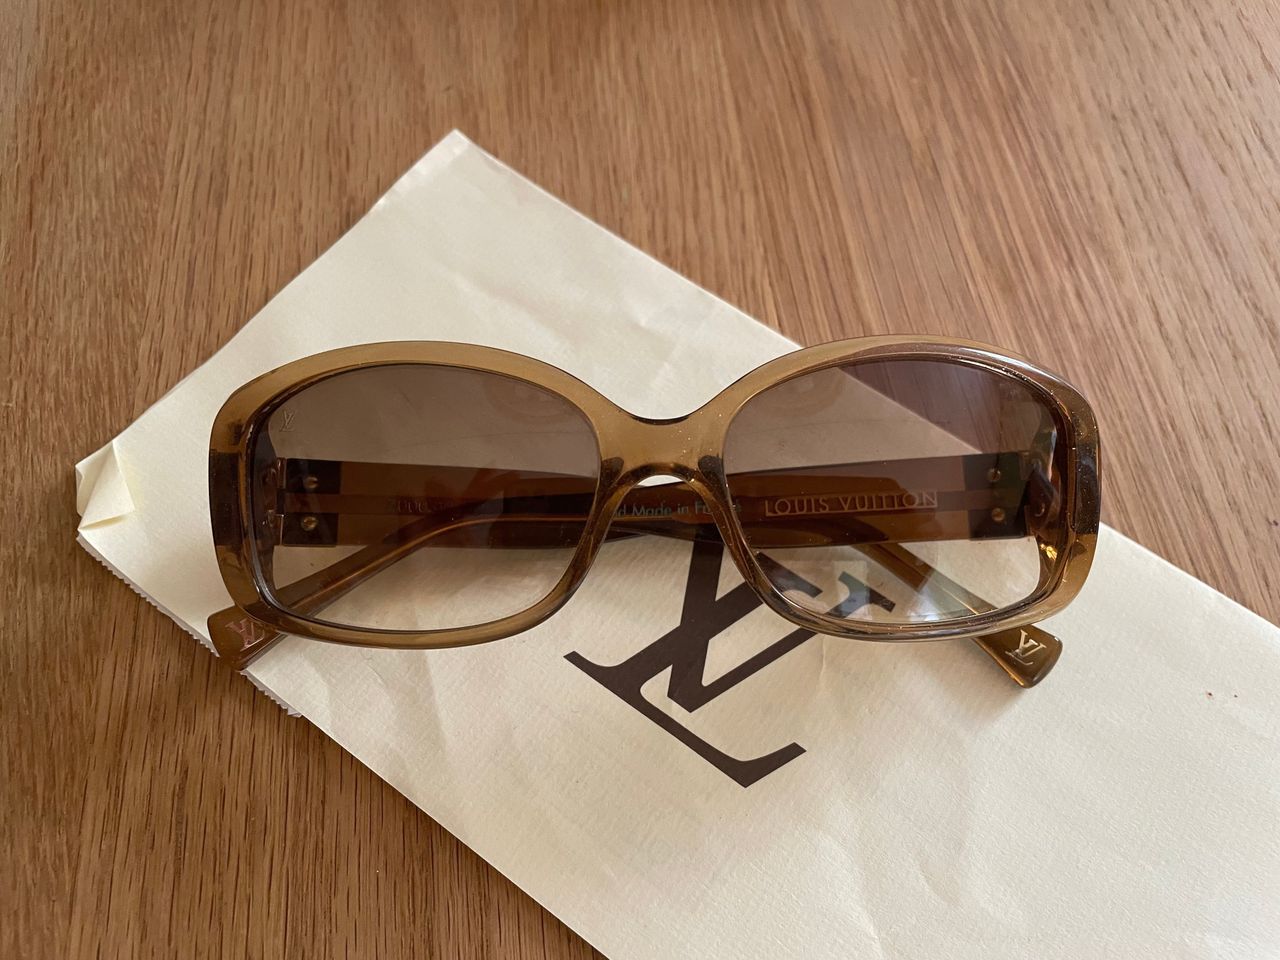 Louis Vuitton solbriller dame - siste sjanse 1000 kr!